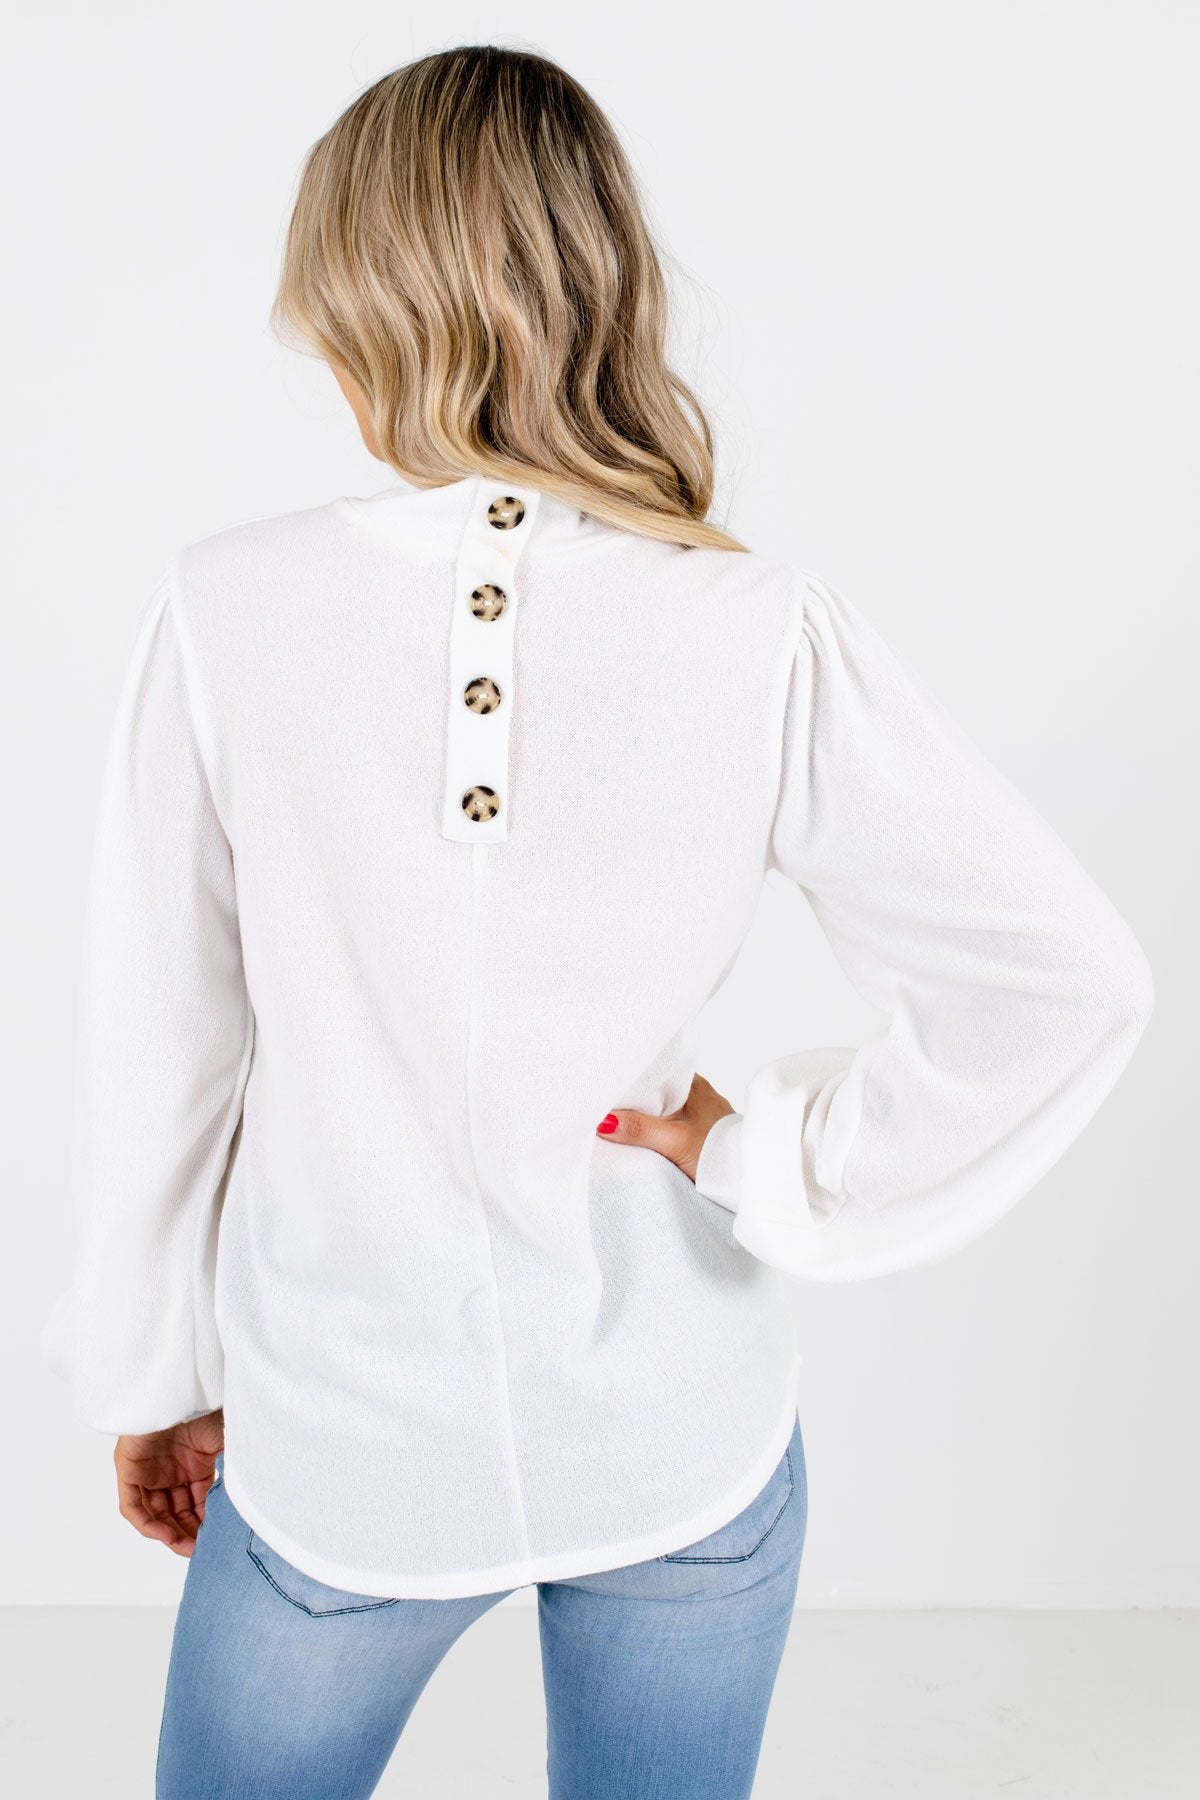 Women’s White Decorative Button Boutique Top